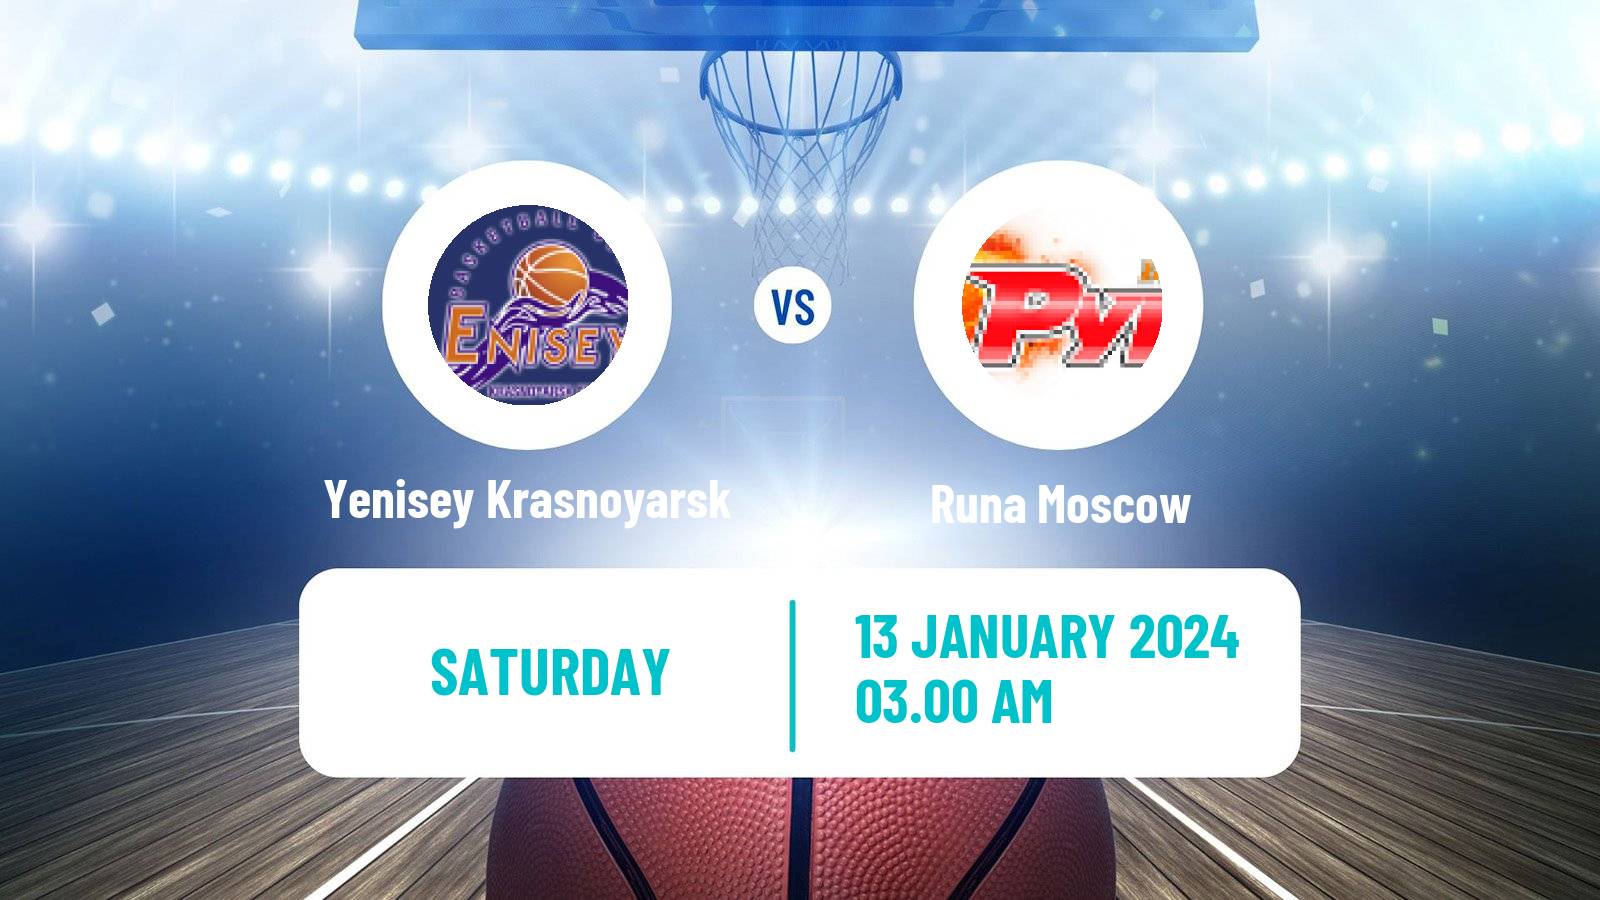 Basketball VTB United League Yenisey Krasnoyarsk - Runa Moscow